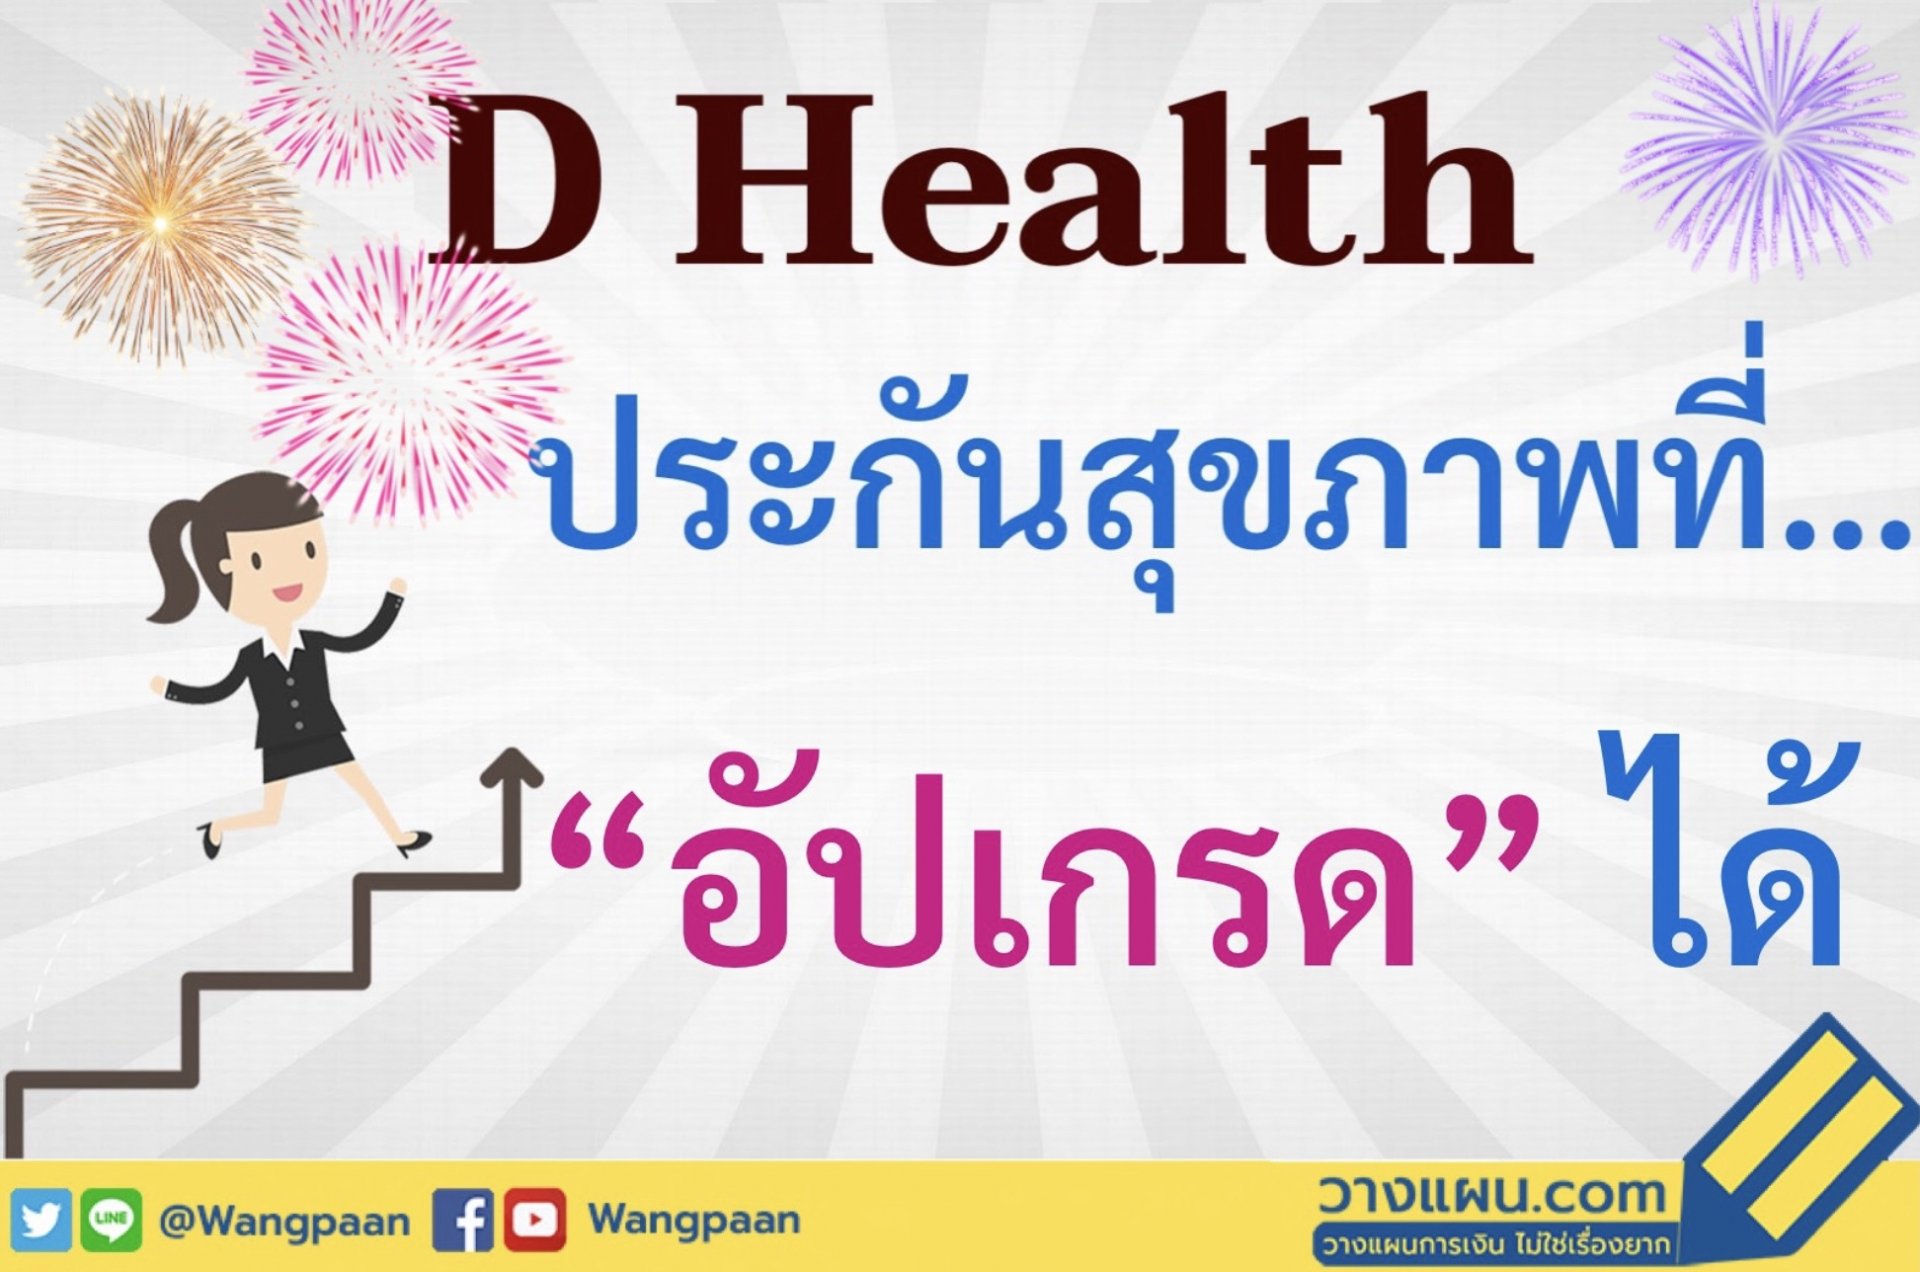 D Health